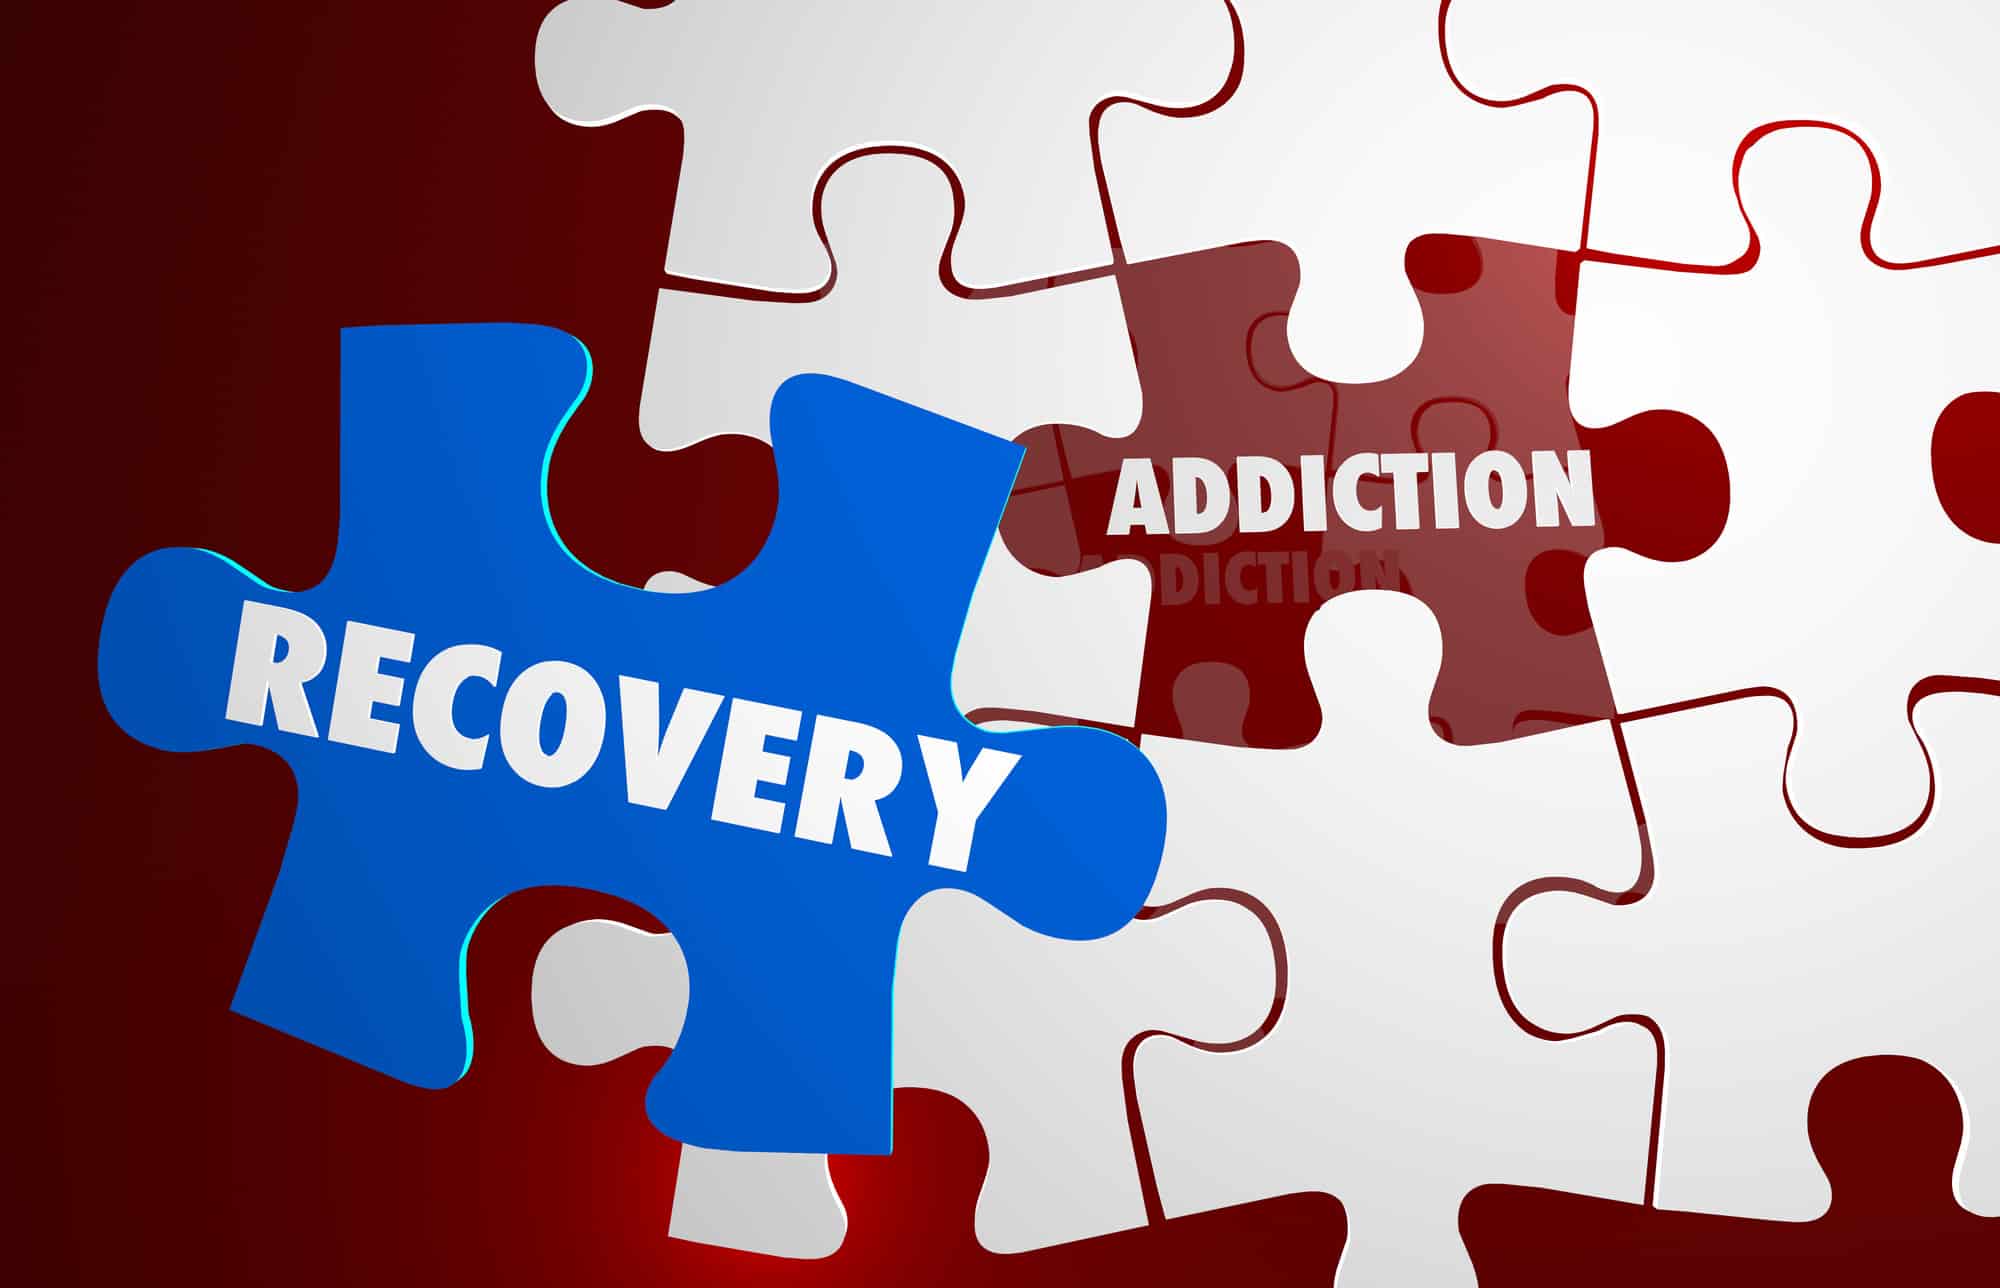 drug addiction recovery